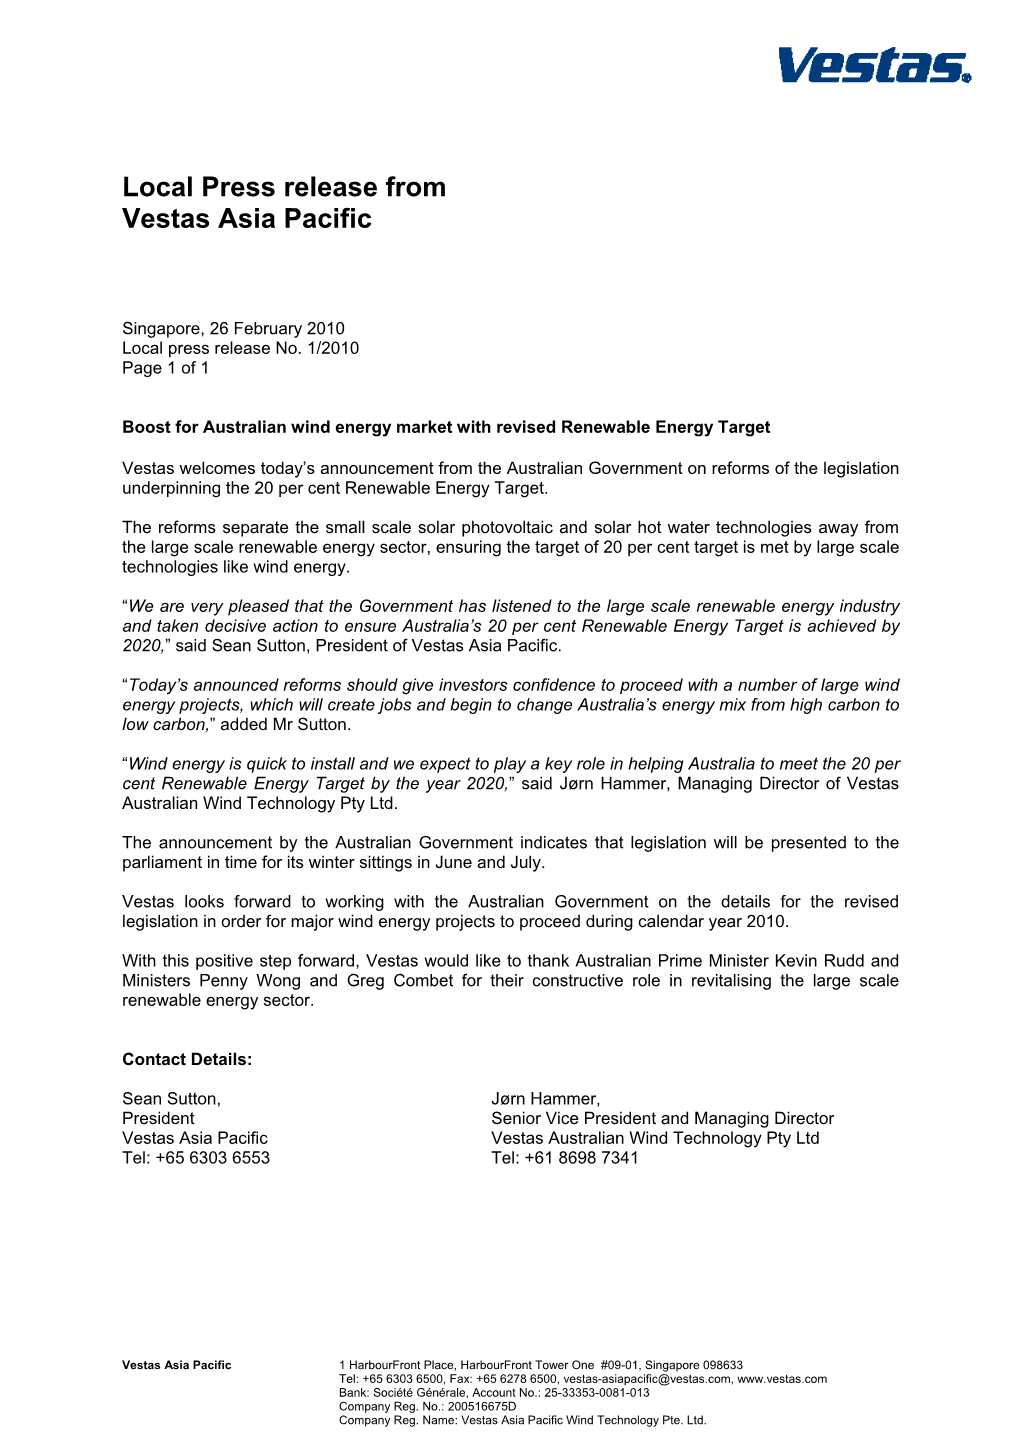 Local Press Release from Vestas Asia Pacific